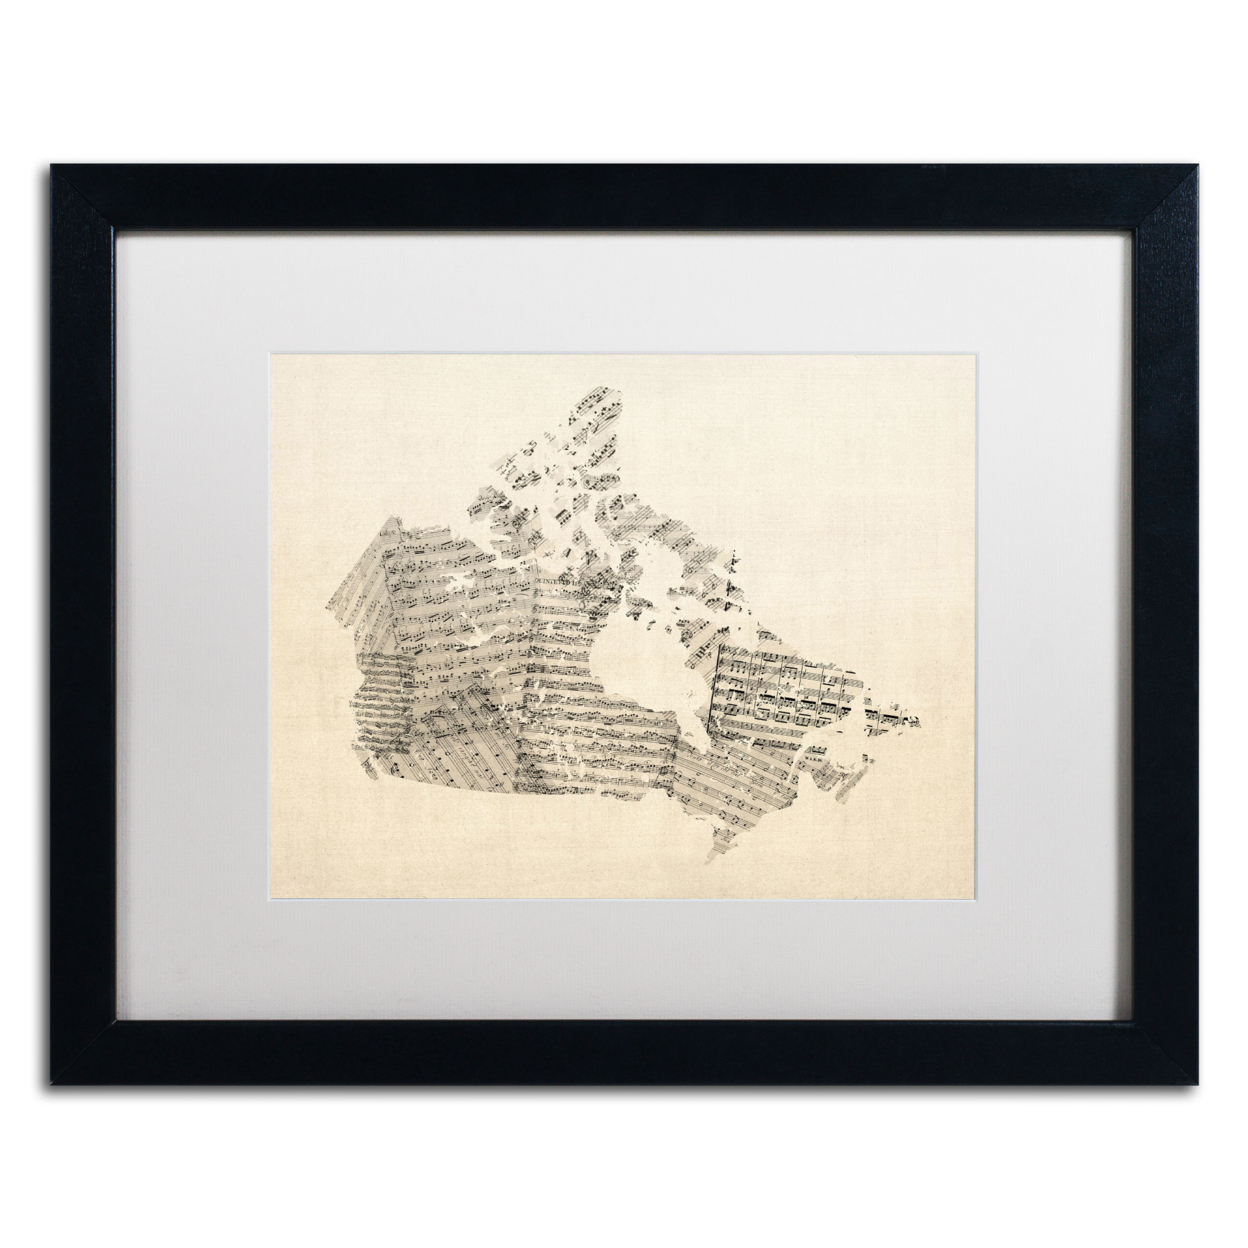 Michael Tompsett 'Old Sheet Music Map Of Canada' Black Wooden Framed Art 18 X 22 Inches